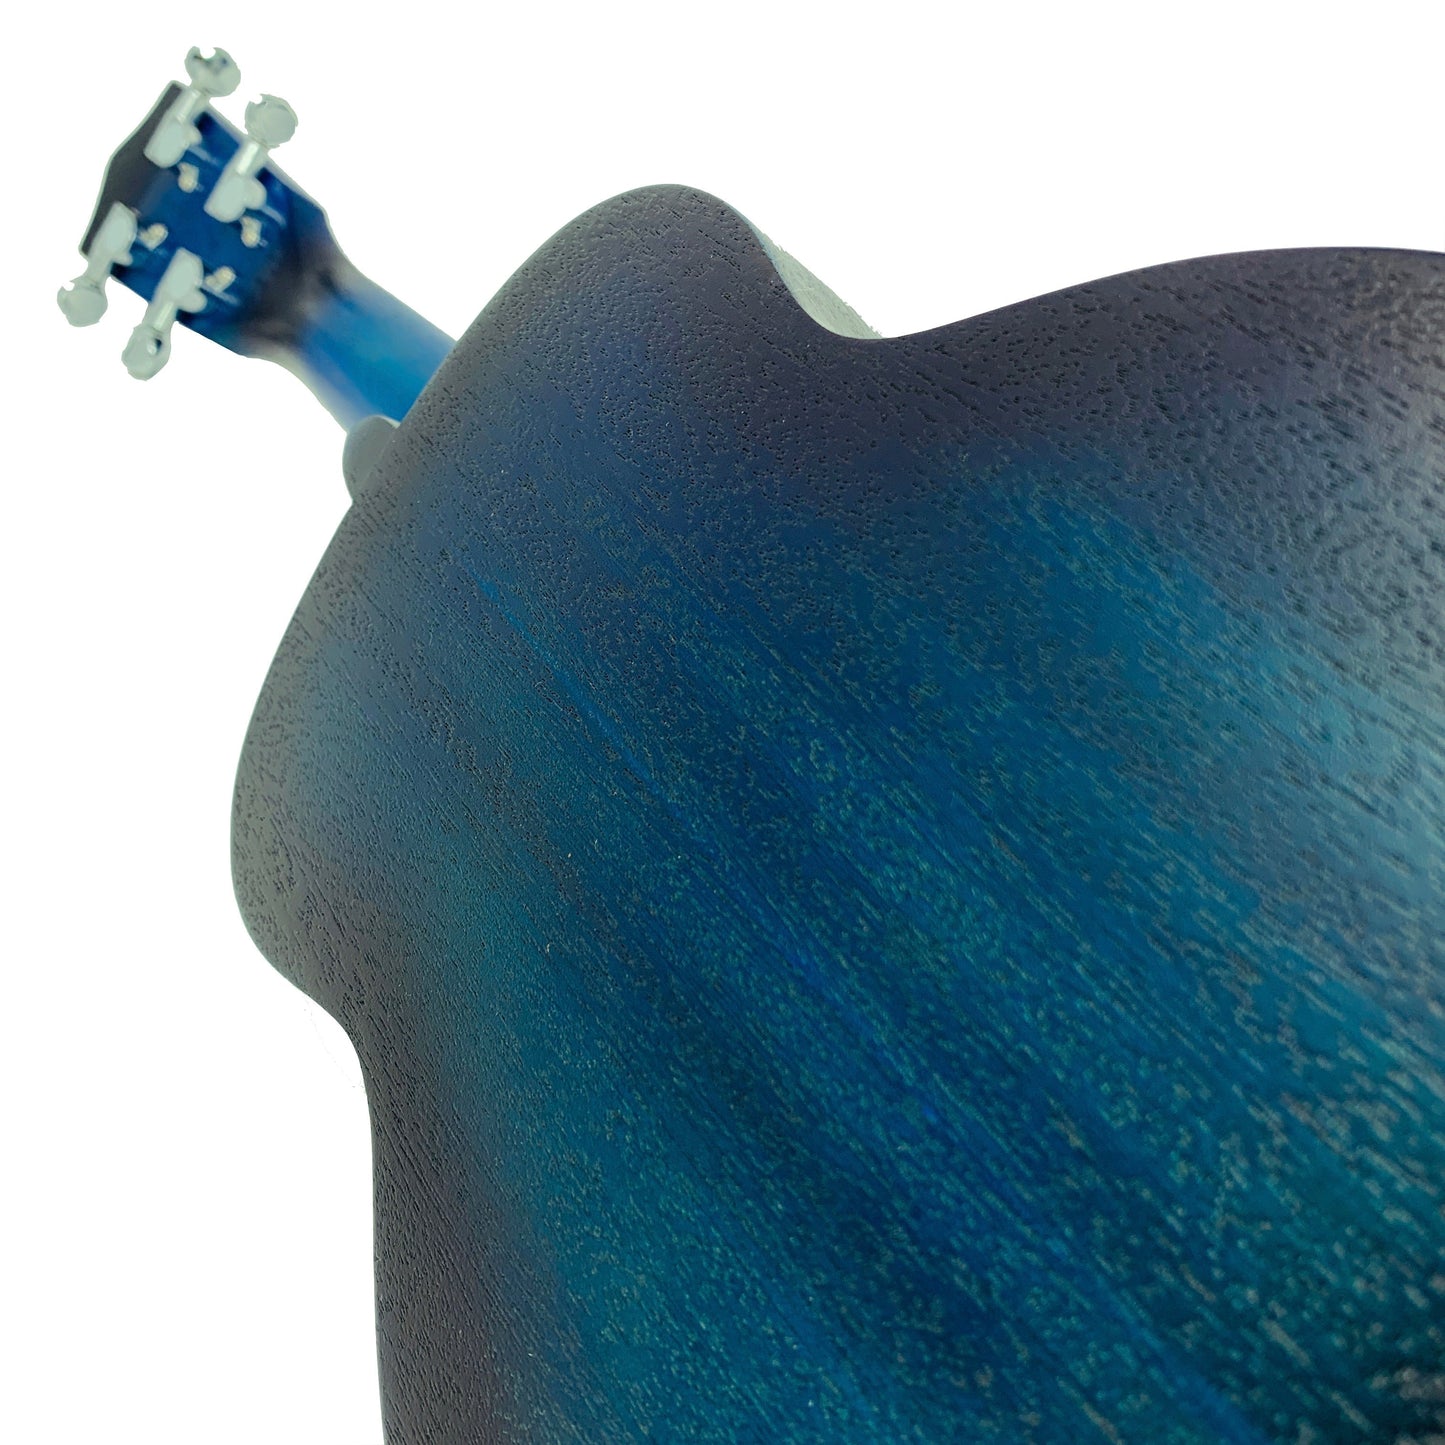 Kalena Mahogany Ukulele Hibiscus Edition Complete Set - Kalena Instruments / Aqua Blue